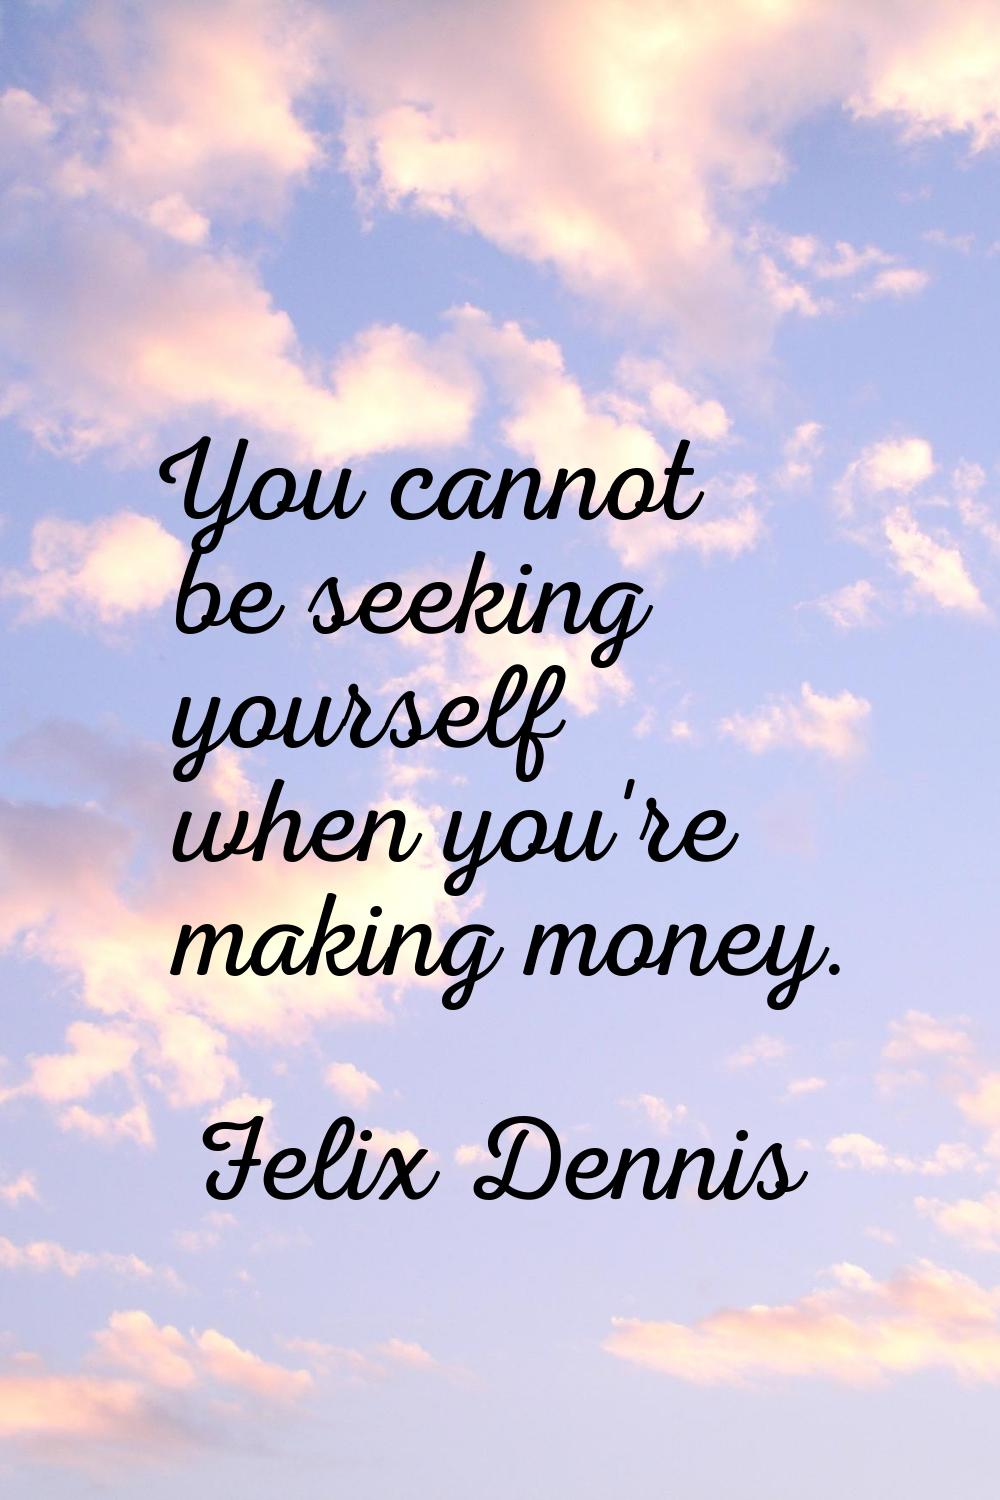 You cannot be seeking yourself when you're making money.